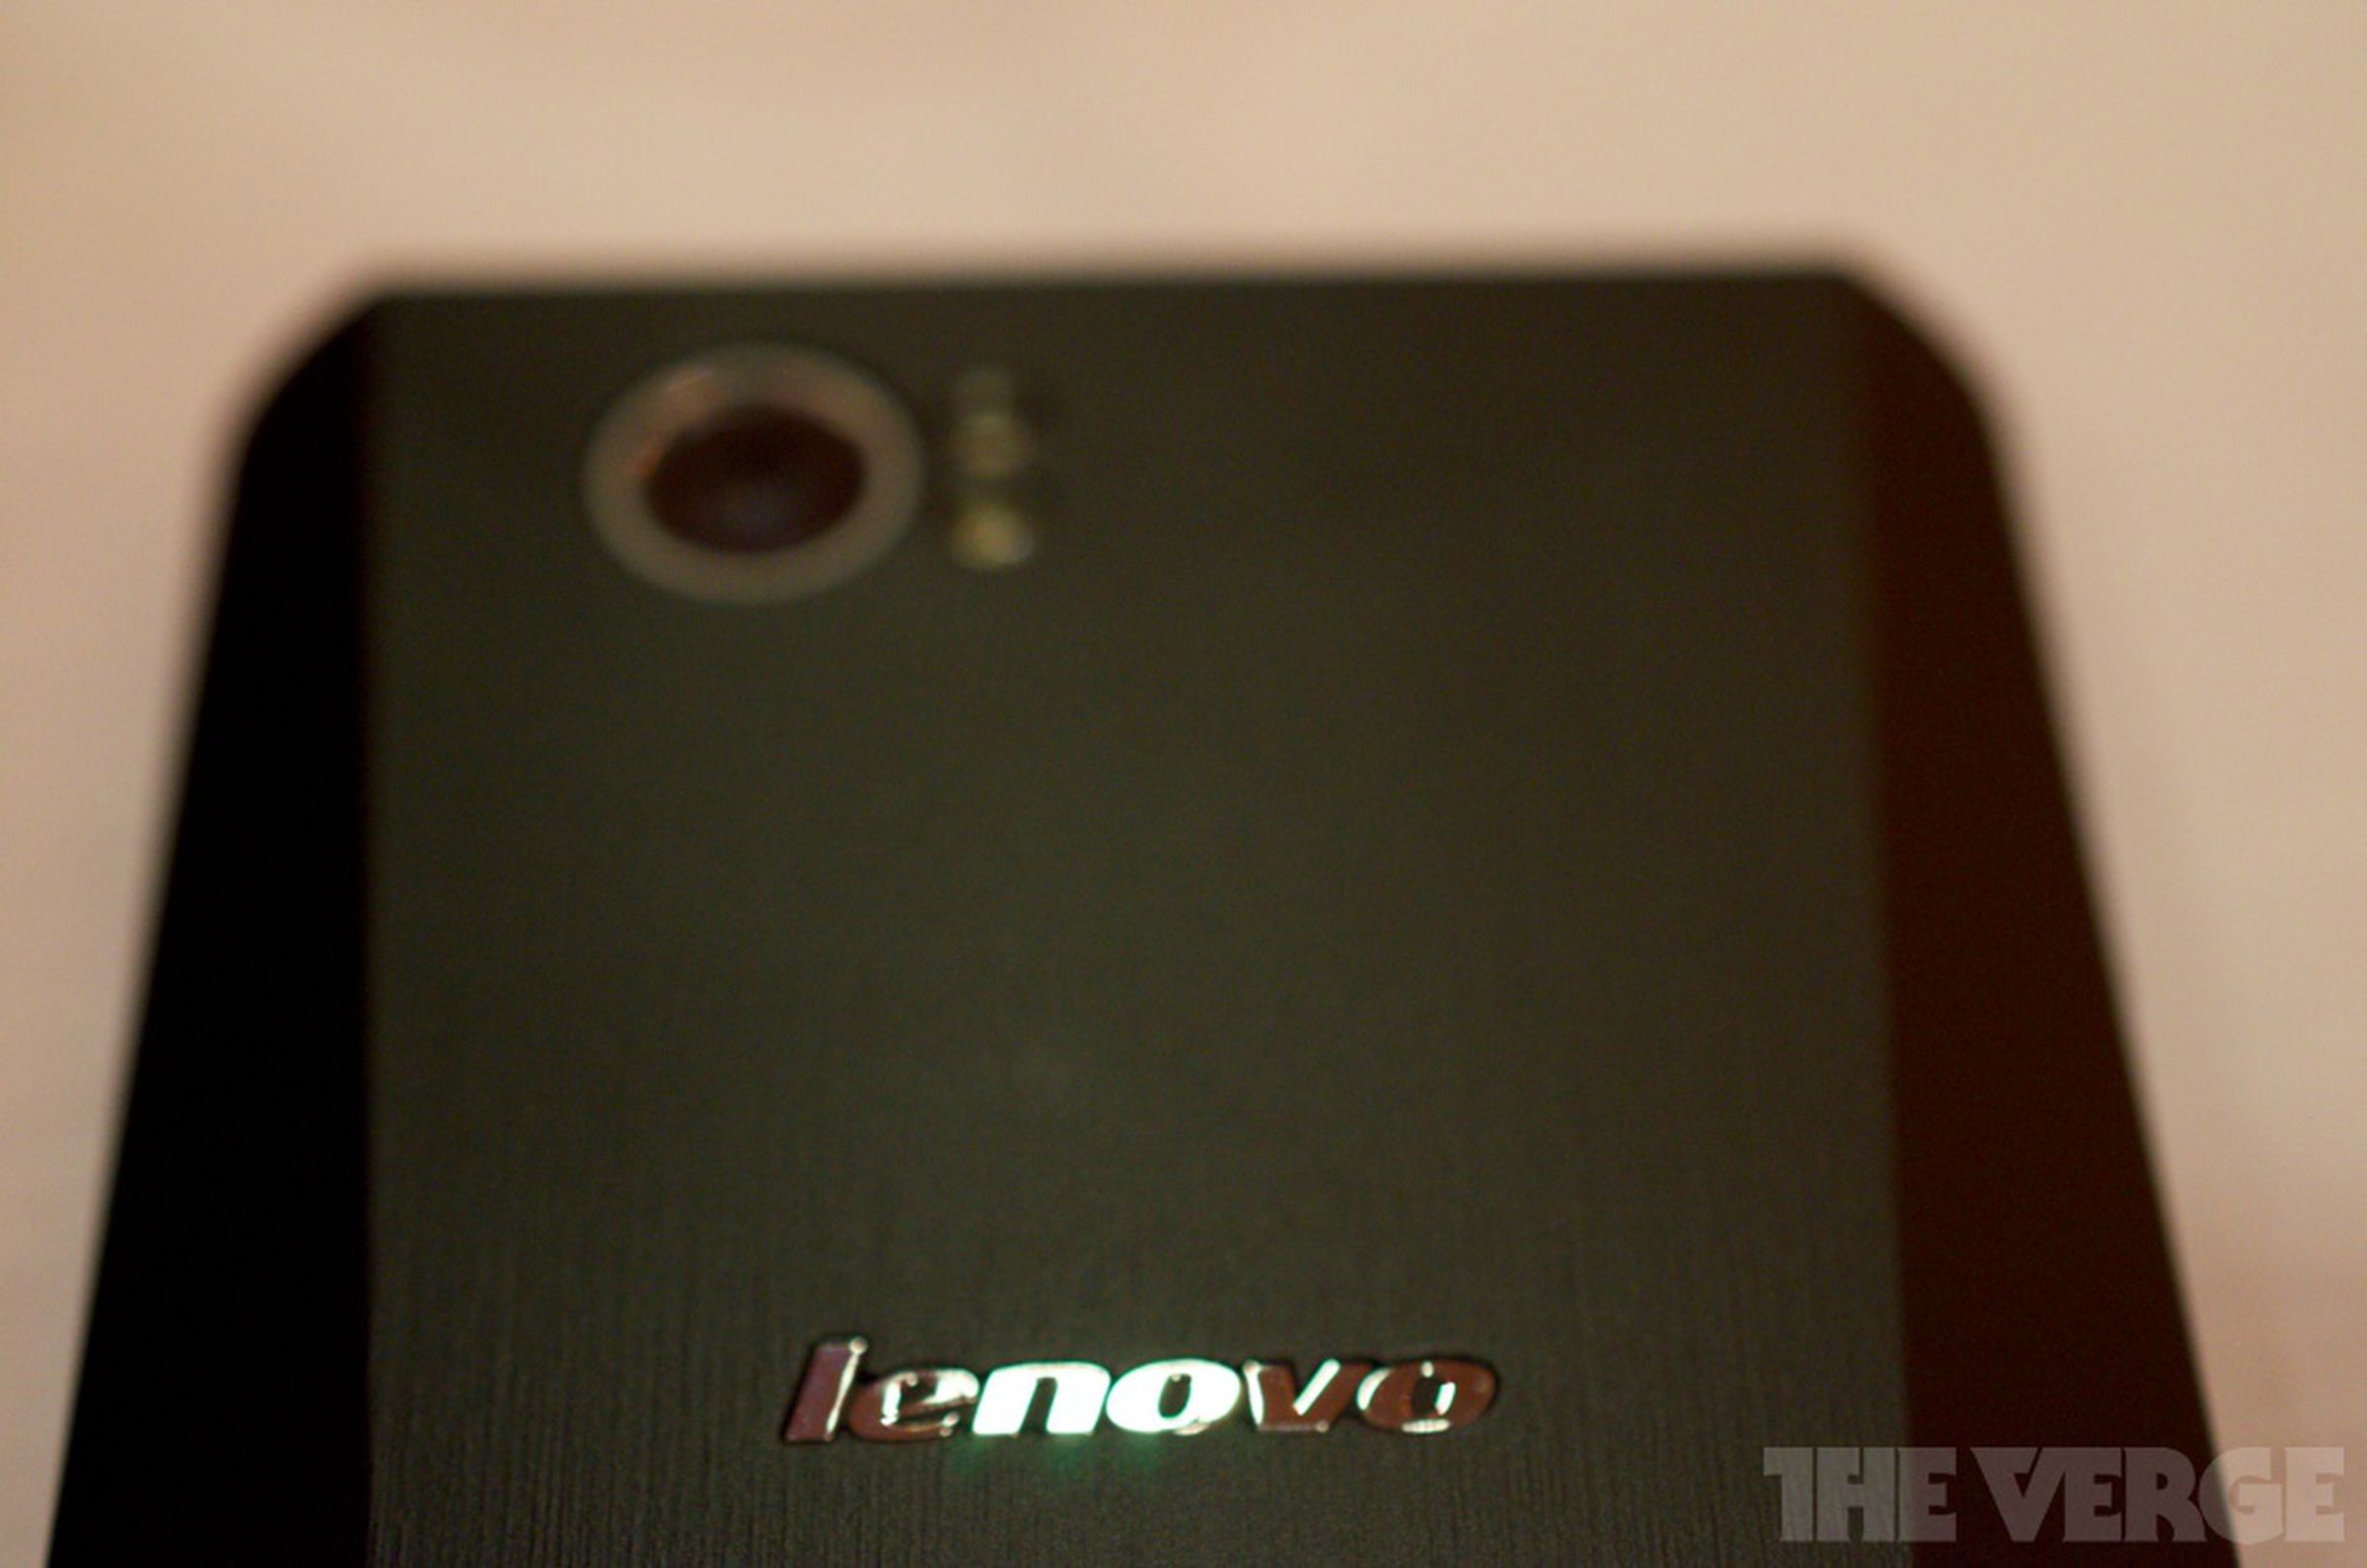 Lenovo K800 Intel Medfield phone hands-on pictures